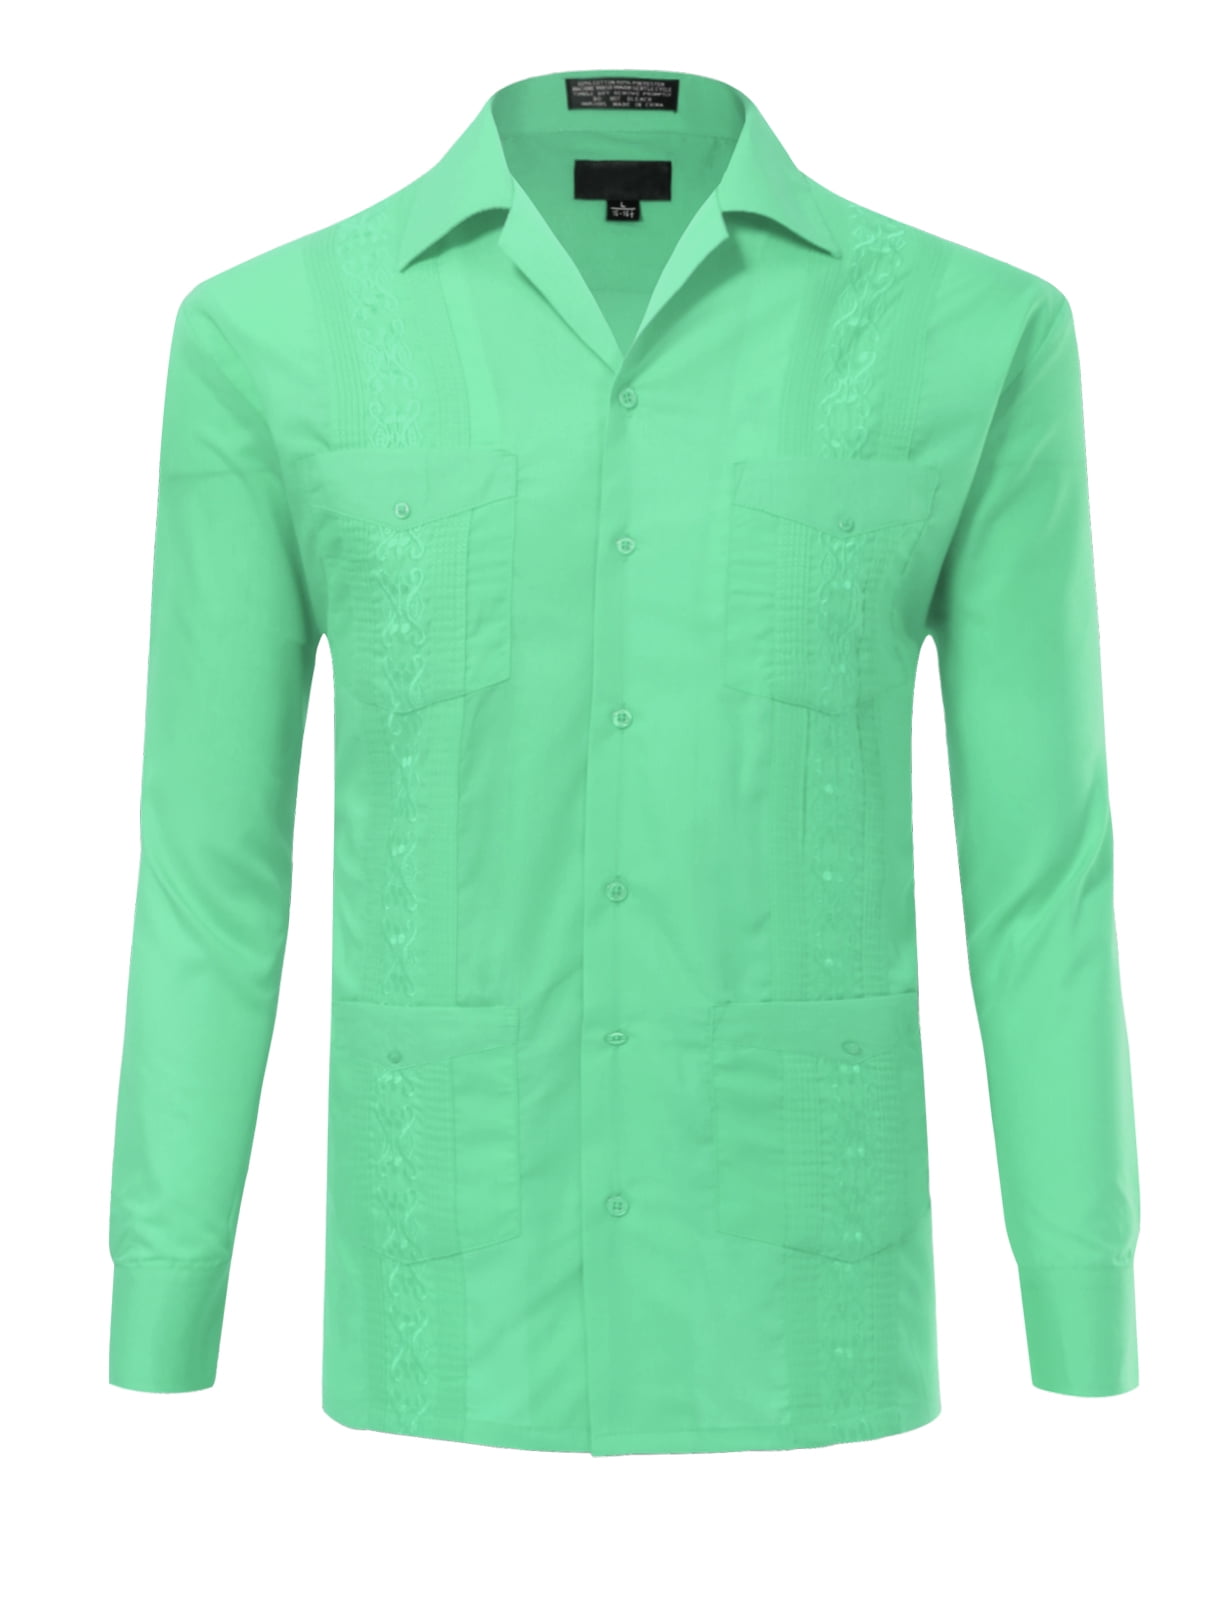 Top Selling Colors Allsense Men Long-Sleeve Button-Down Dress Shirts